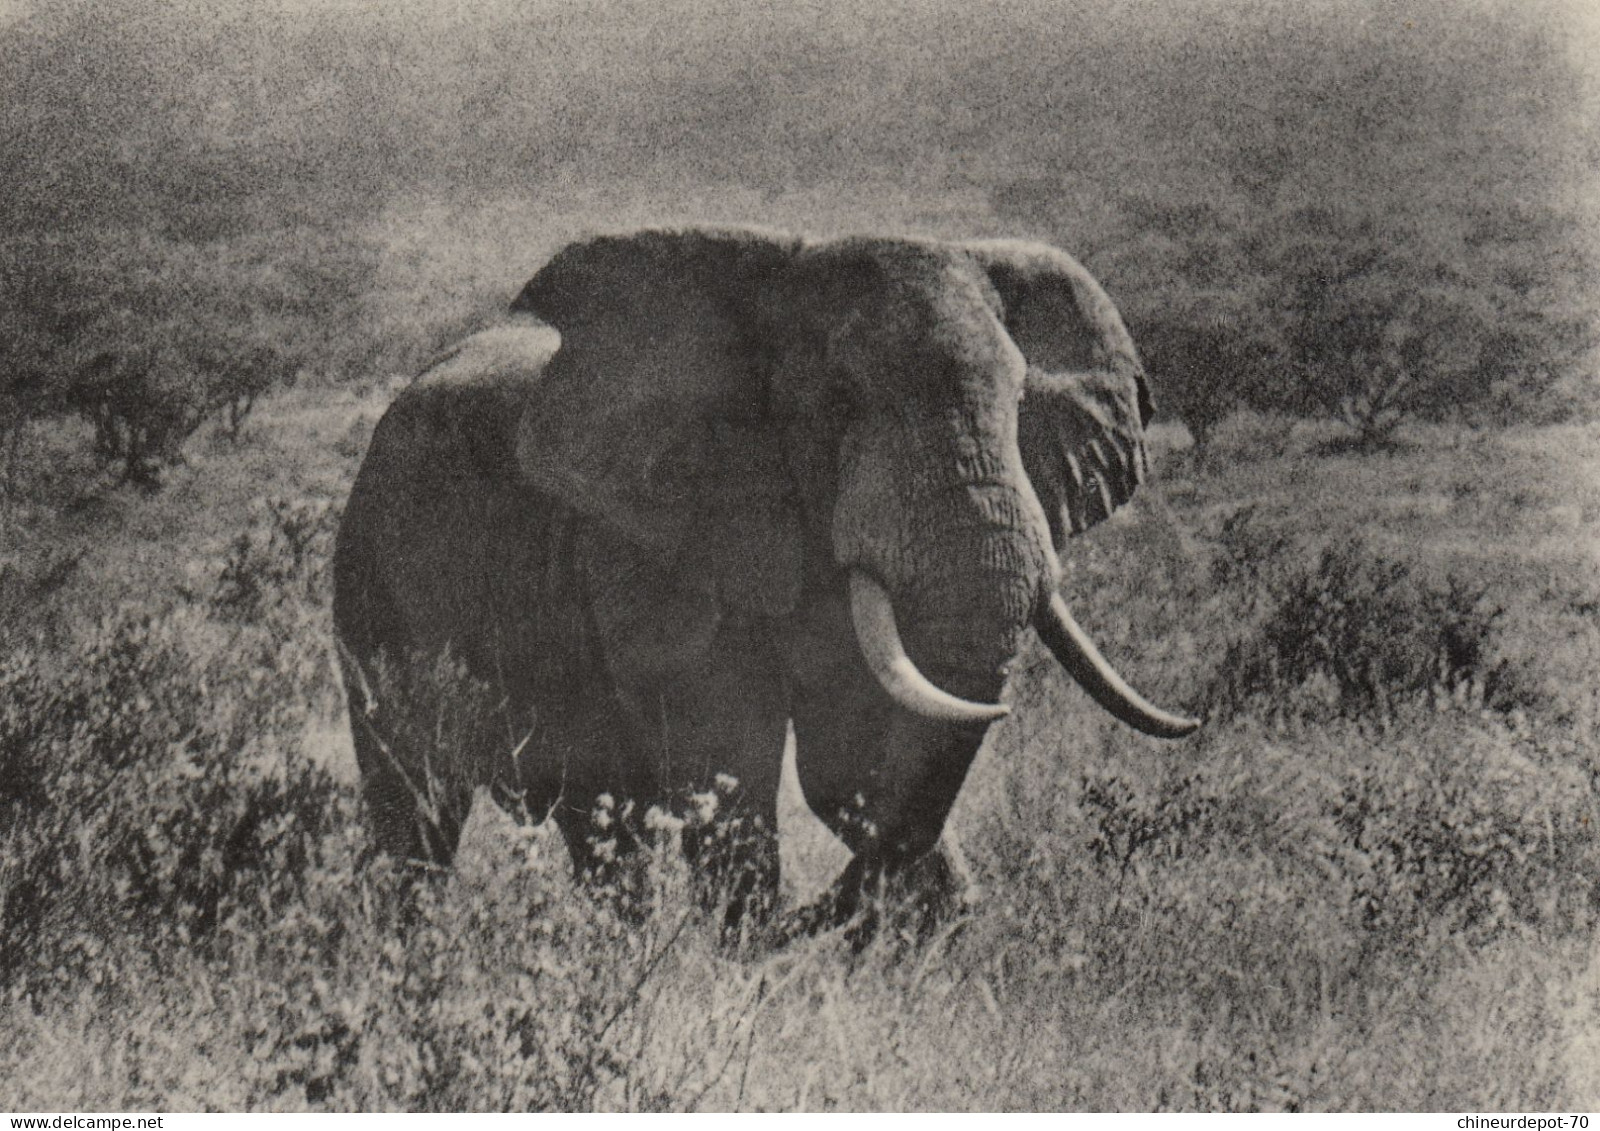 OLD SOLITARY ELEPHANT CONGO BELGE - Éléphants